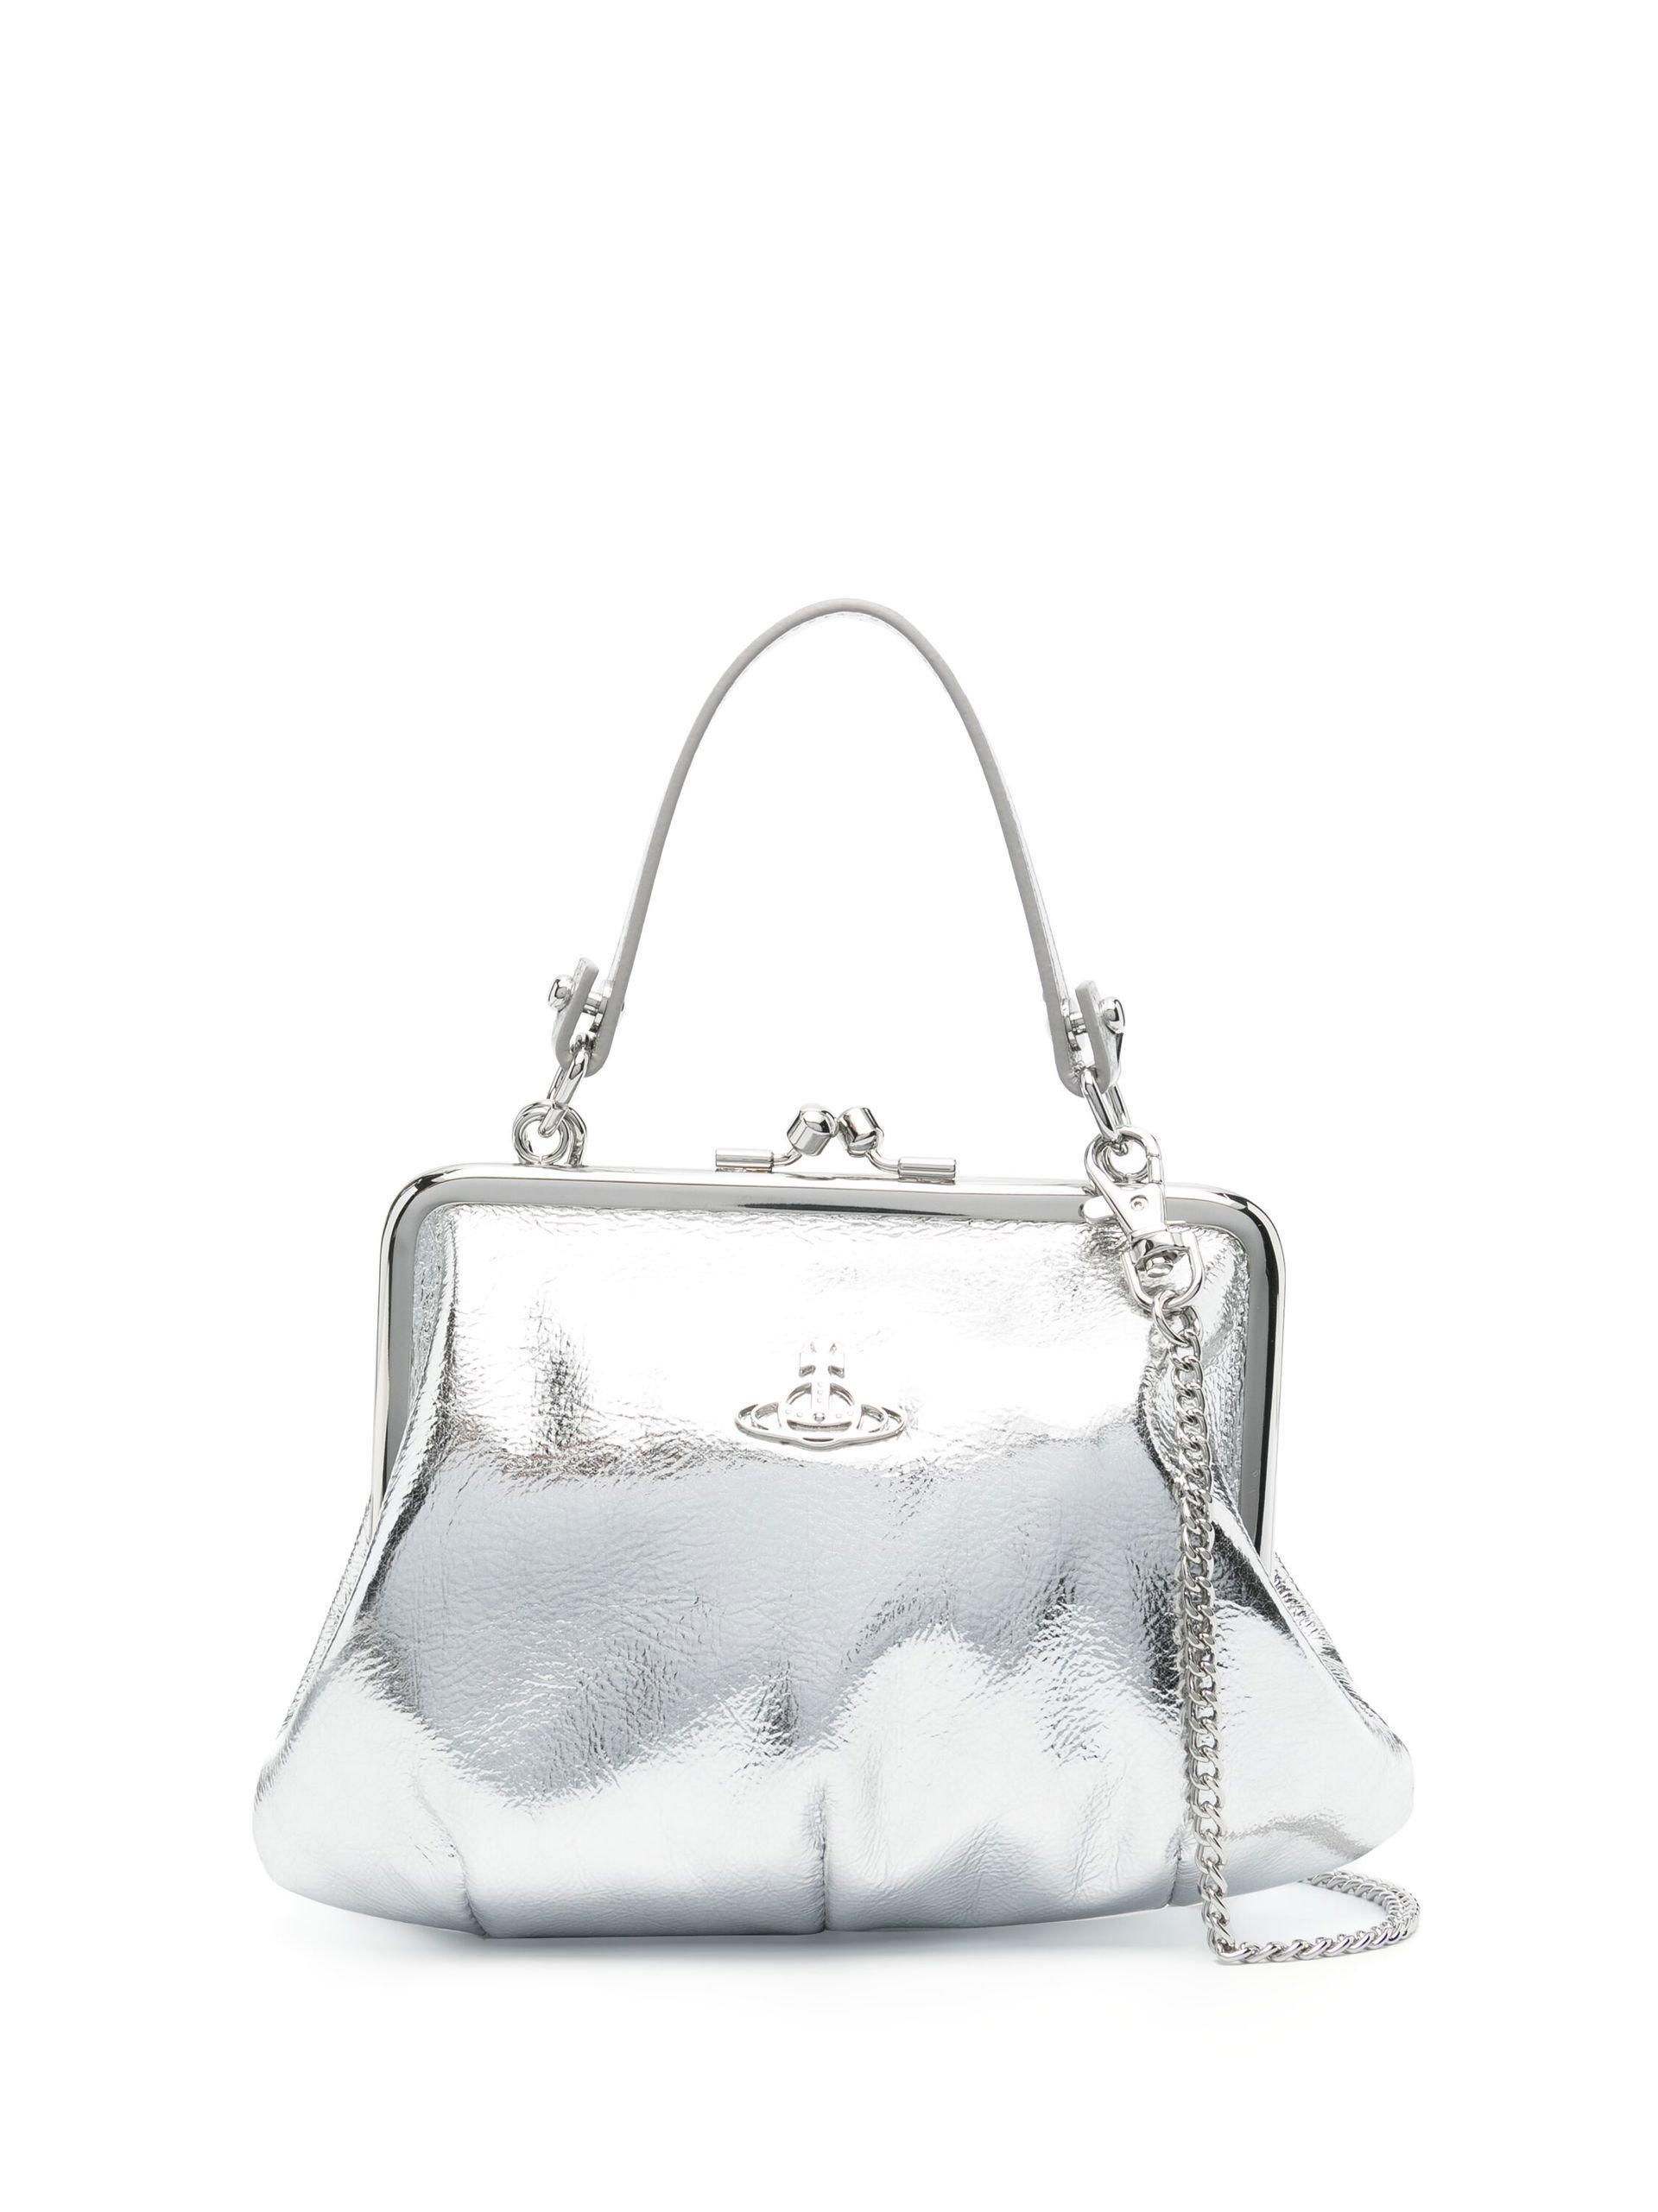 Vivienne Westwood Granny Frame Metallic Mini Bag in White | Lyst